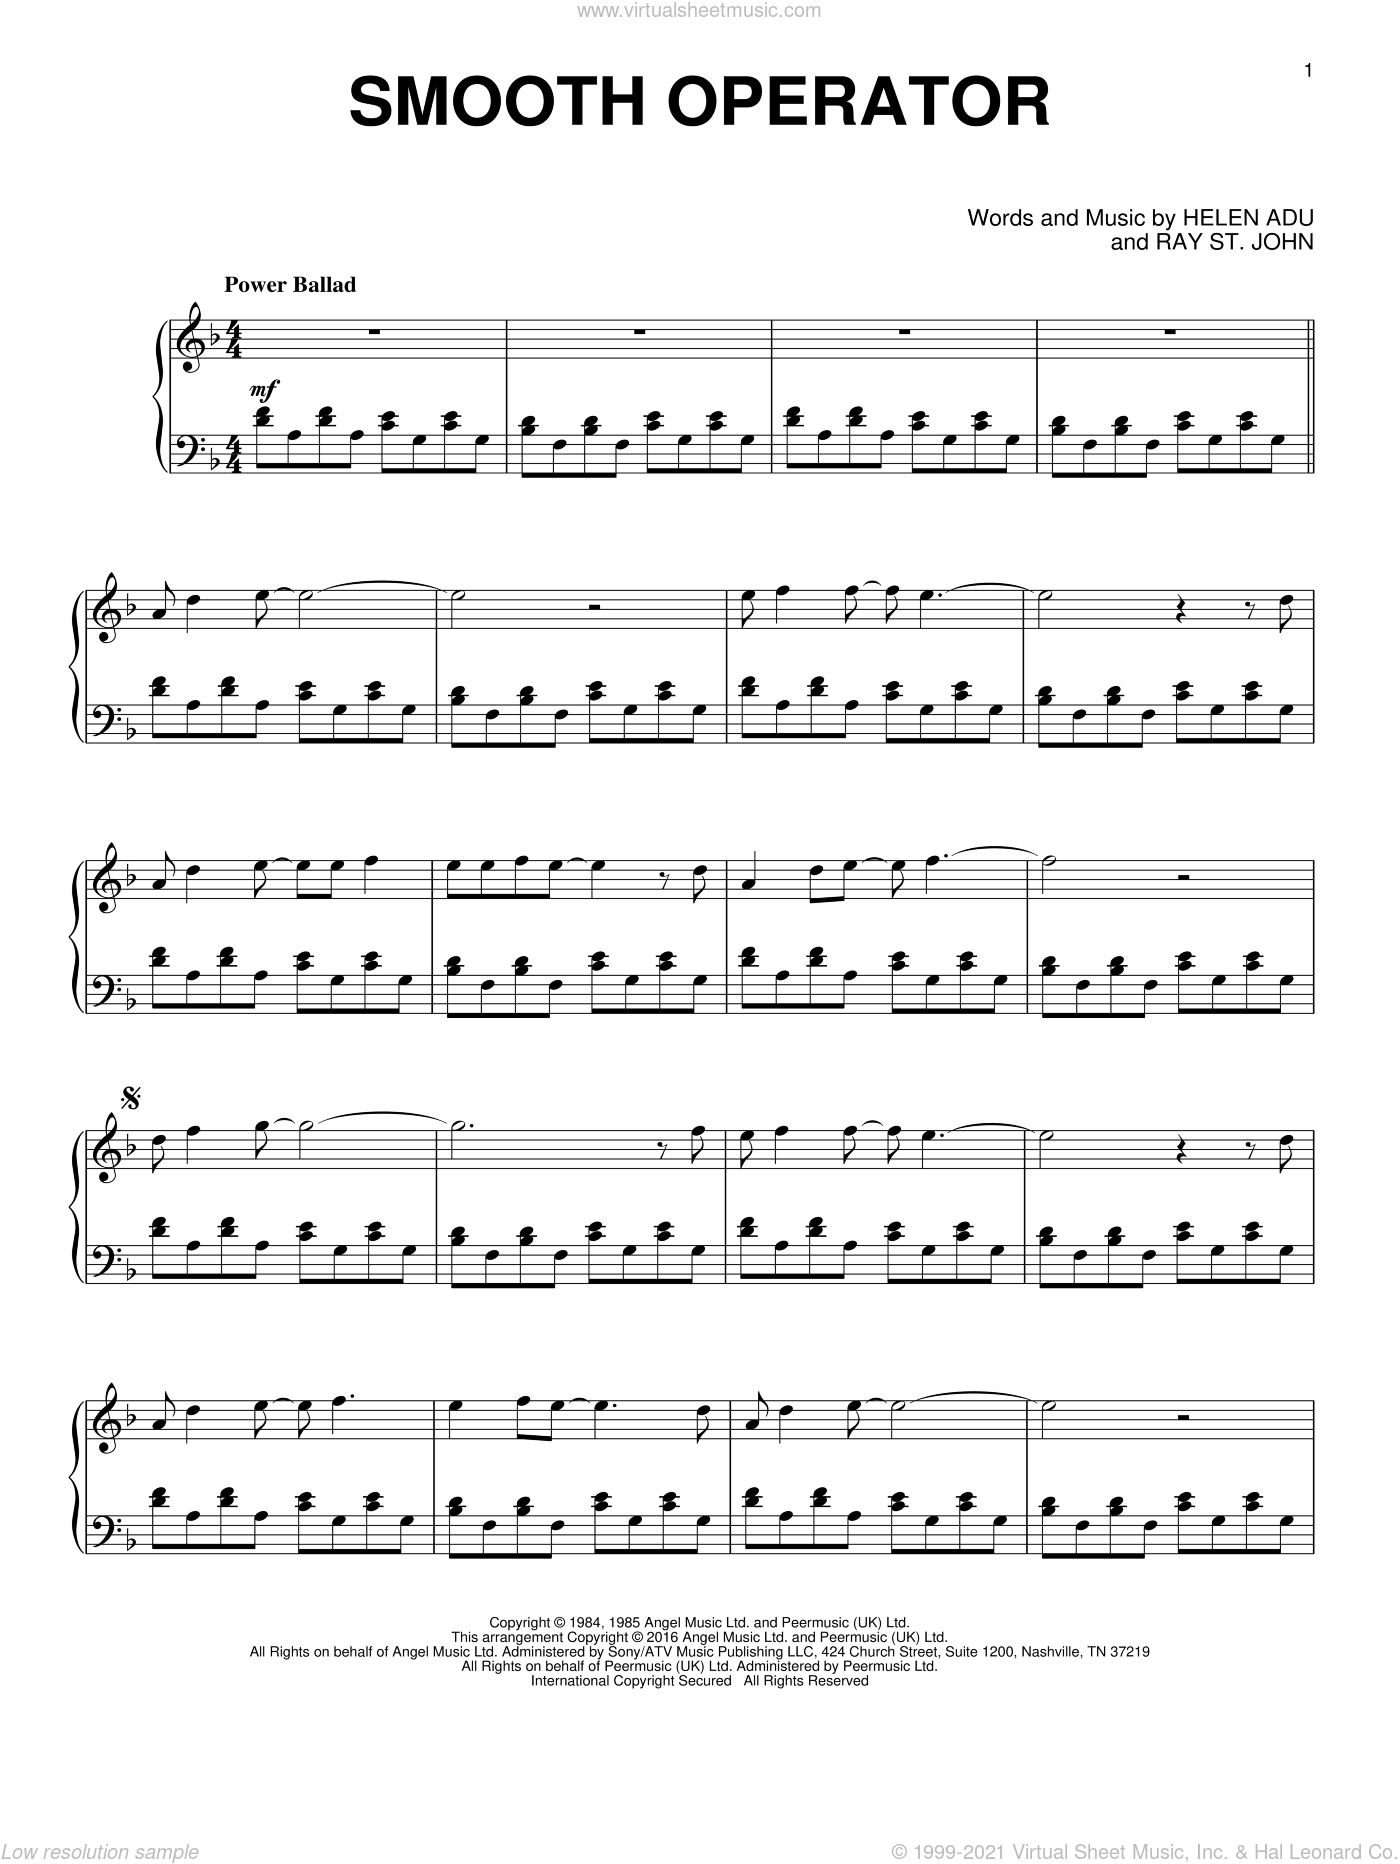 Sade - Smooth Operator Sheet Music For Piano Solo [PDF]